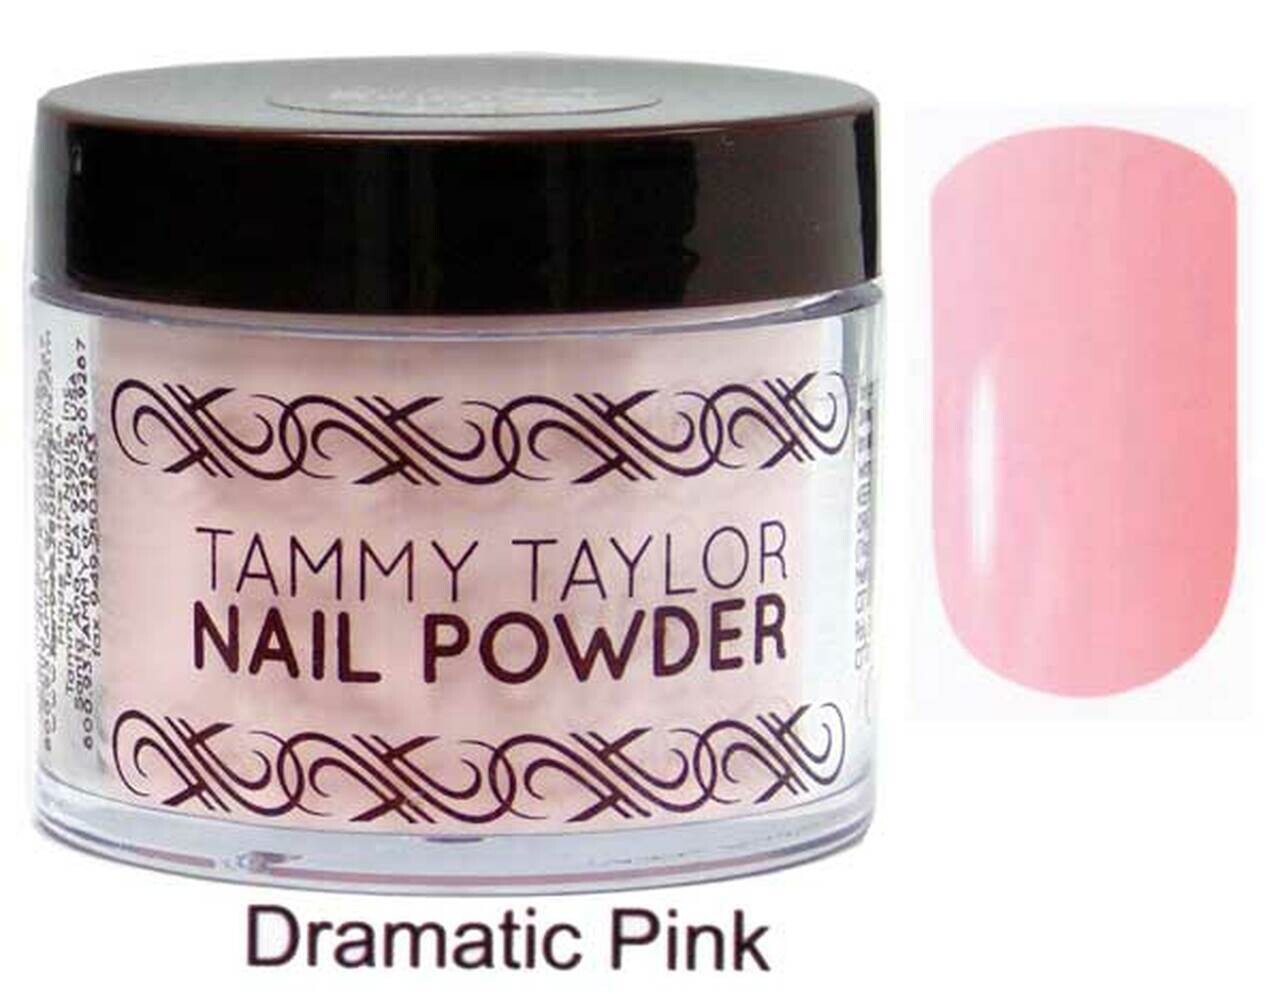 Tammy Taylor Dramatic Pink 5oz